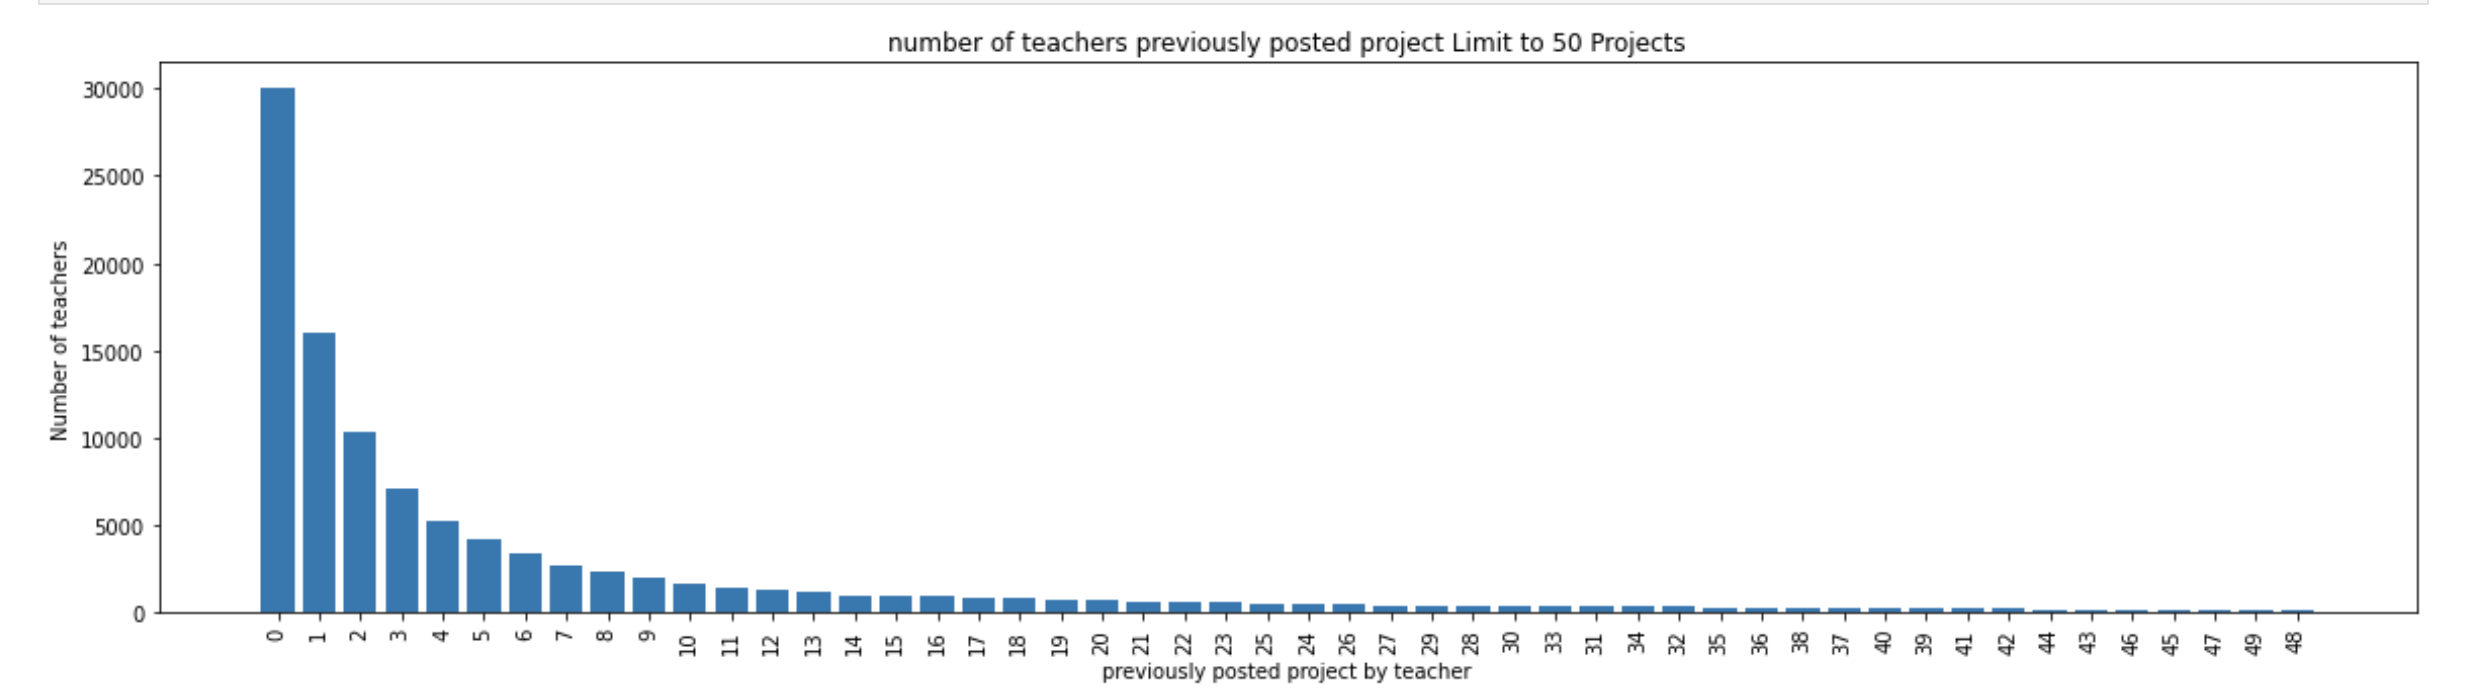 teacher_project_number!